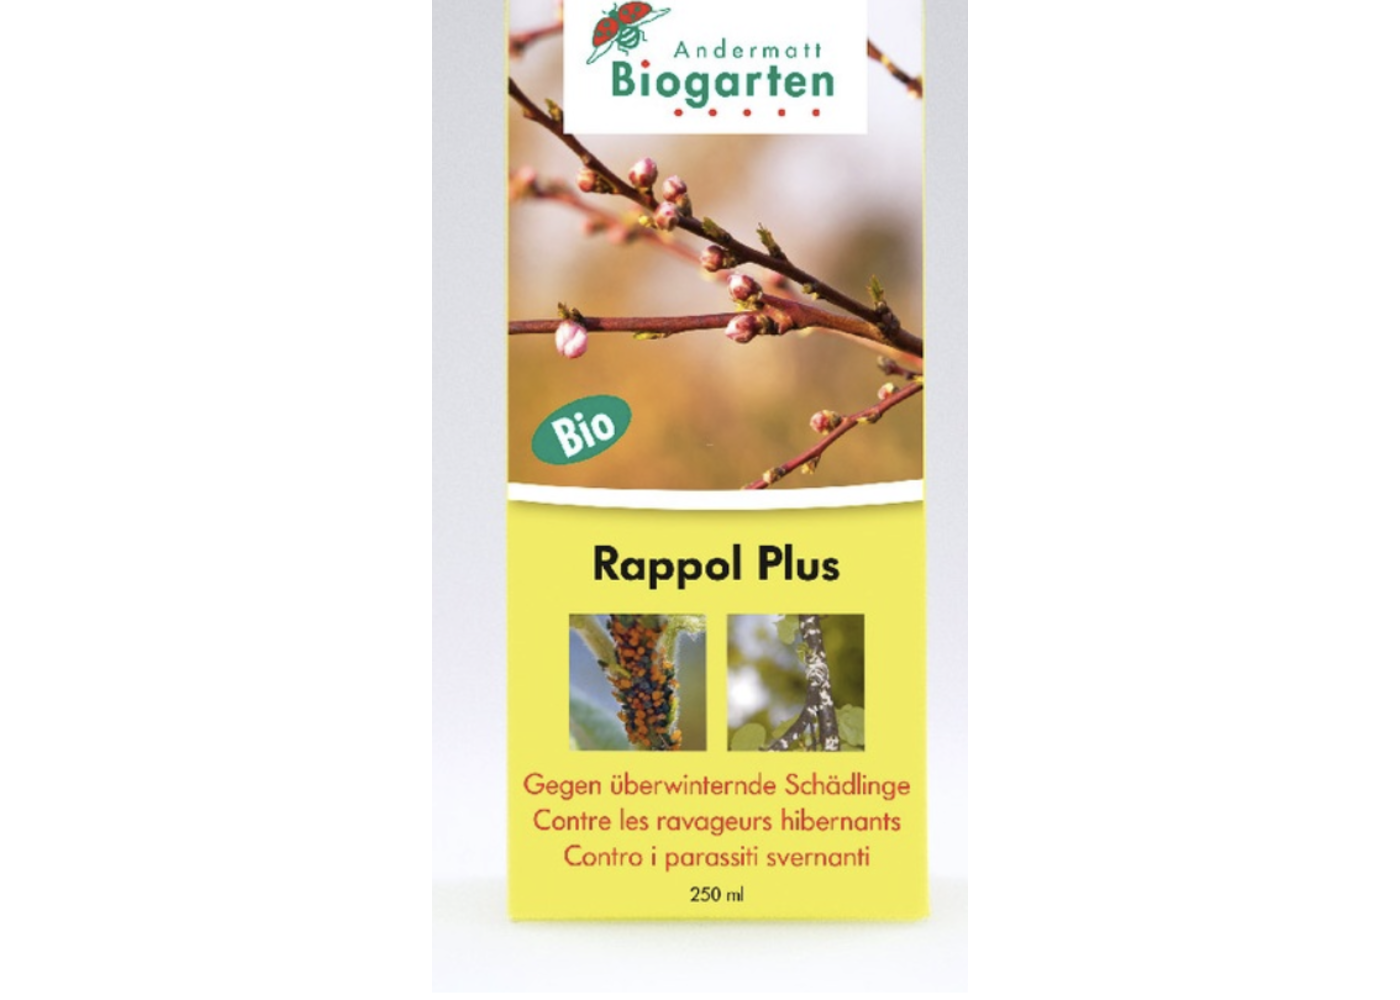 Biogarten Rappol Plus 250ml